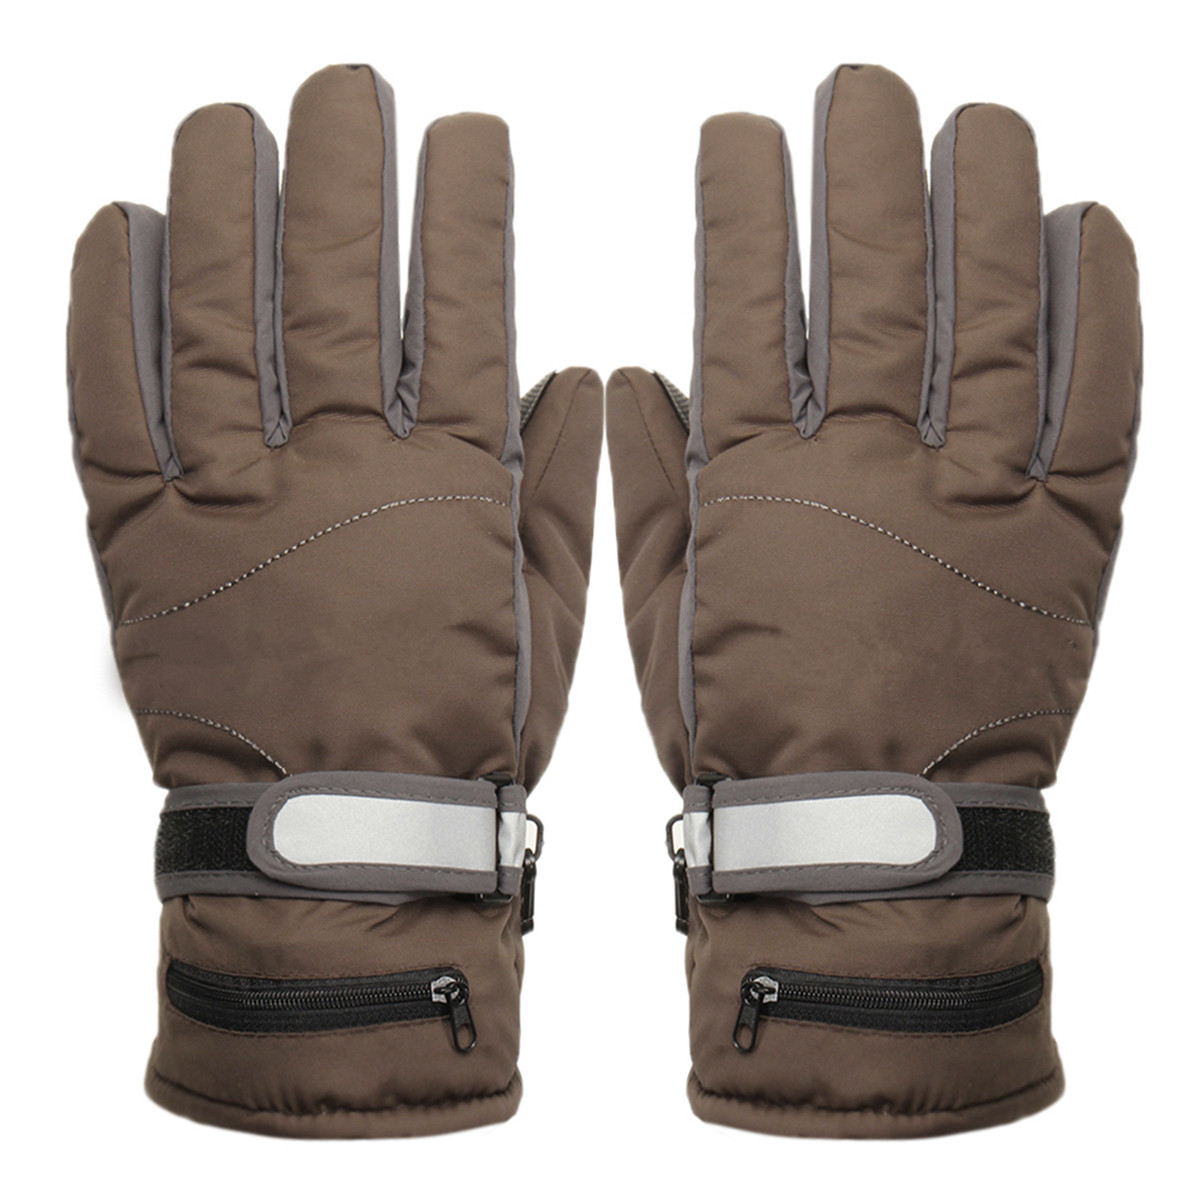 37V-2000mAh-Battery-Heated-Gloves-Motorcycle-Hunting-Winter-Warmer-Racing-Skiing-1241845